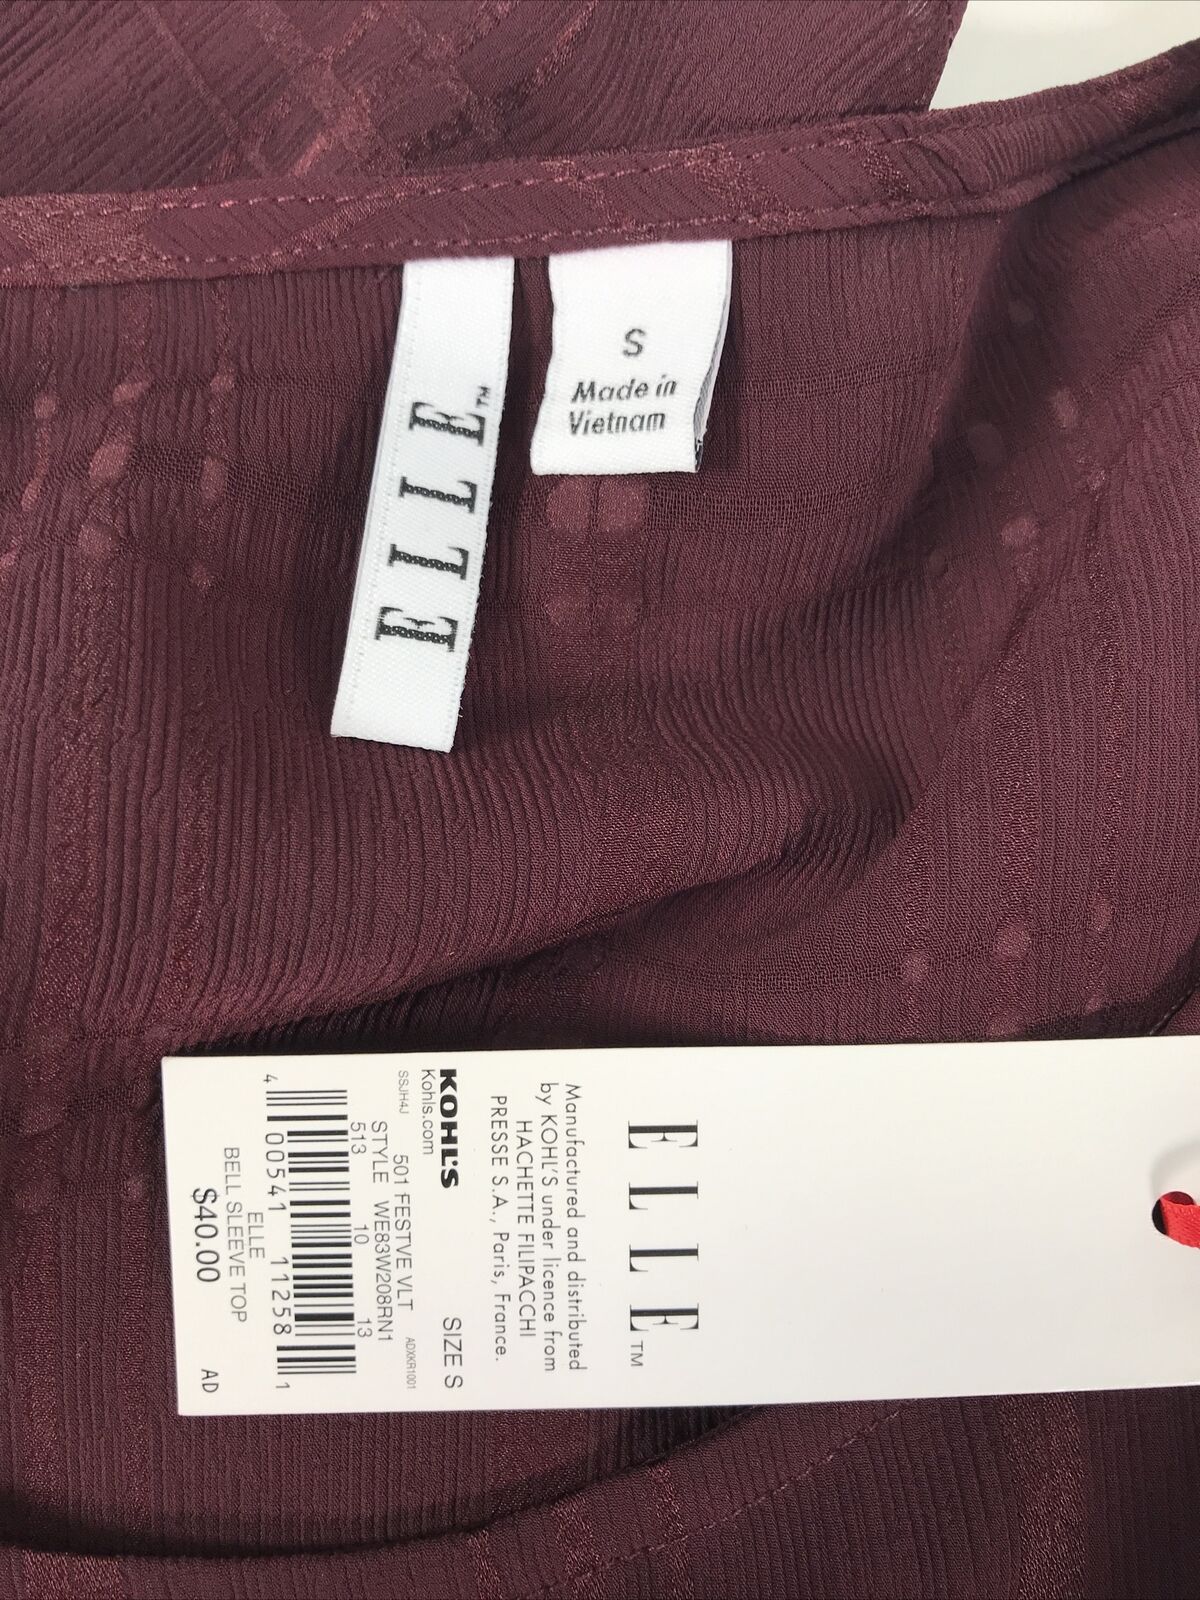 NEW Elle Women's Red/Burgundy 3/4 Bell Sleeve Blouse Top Sz S